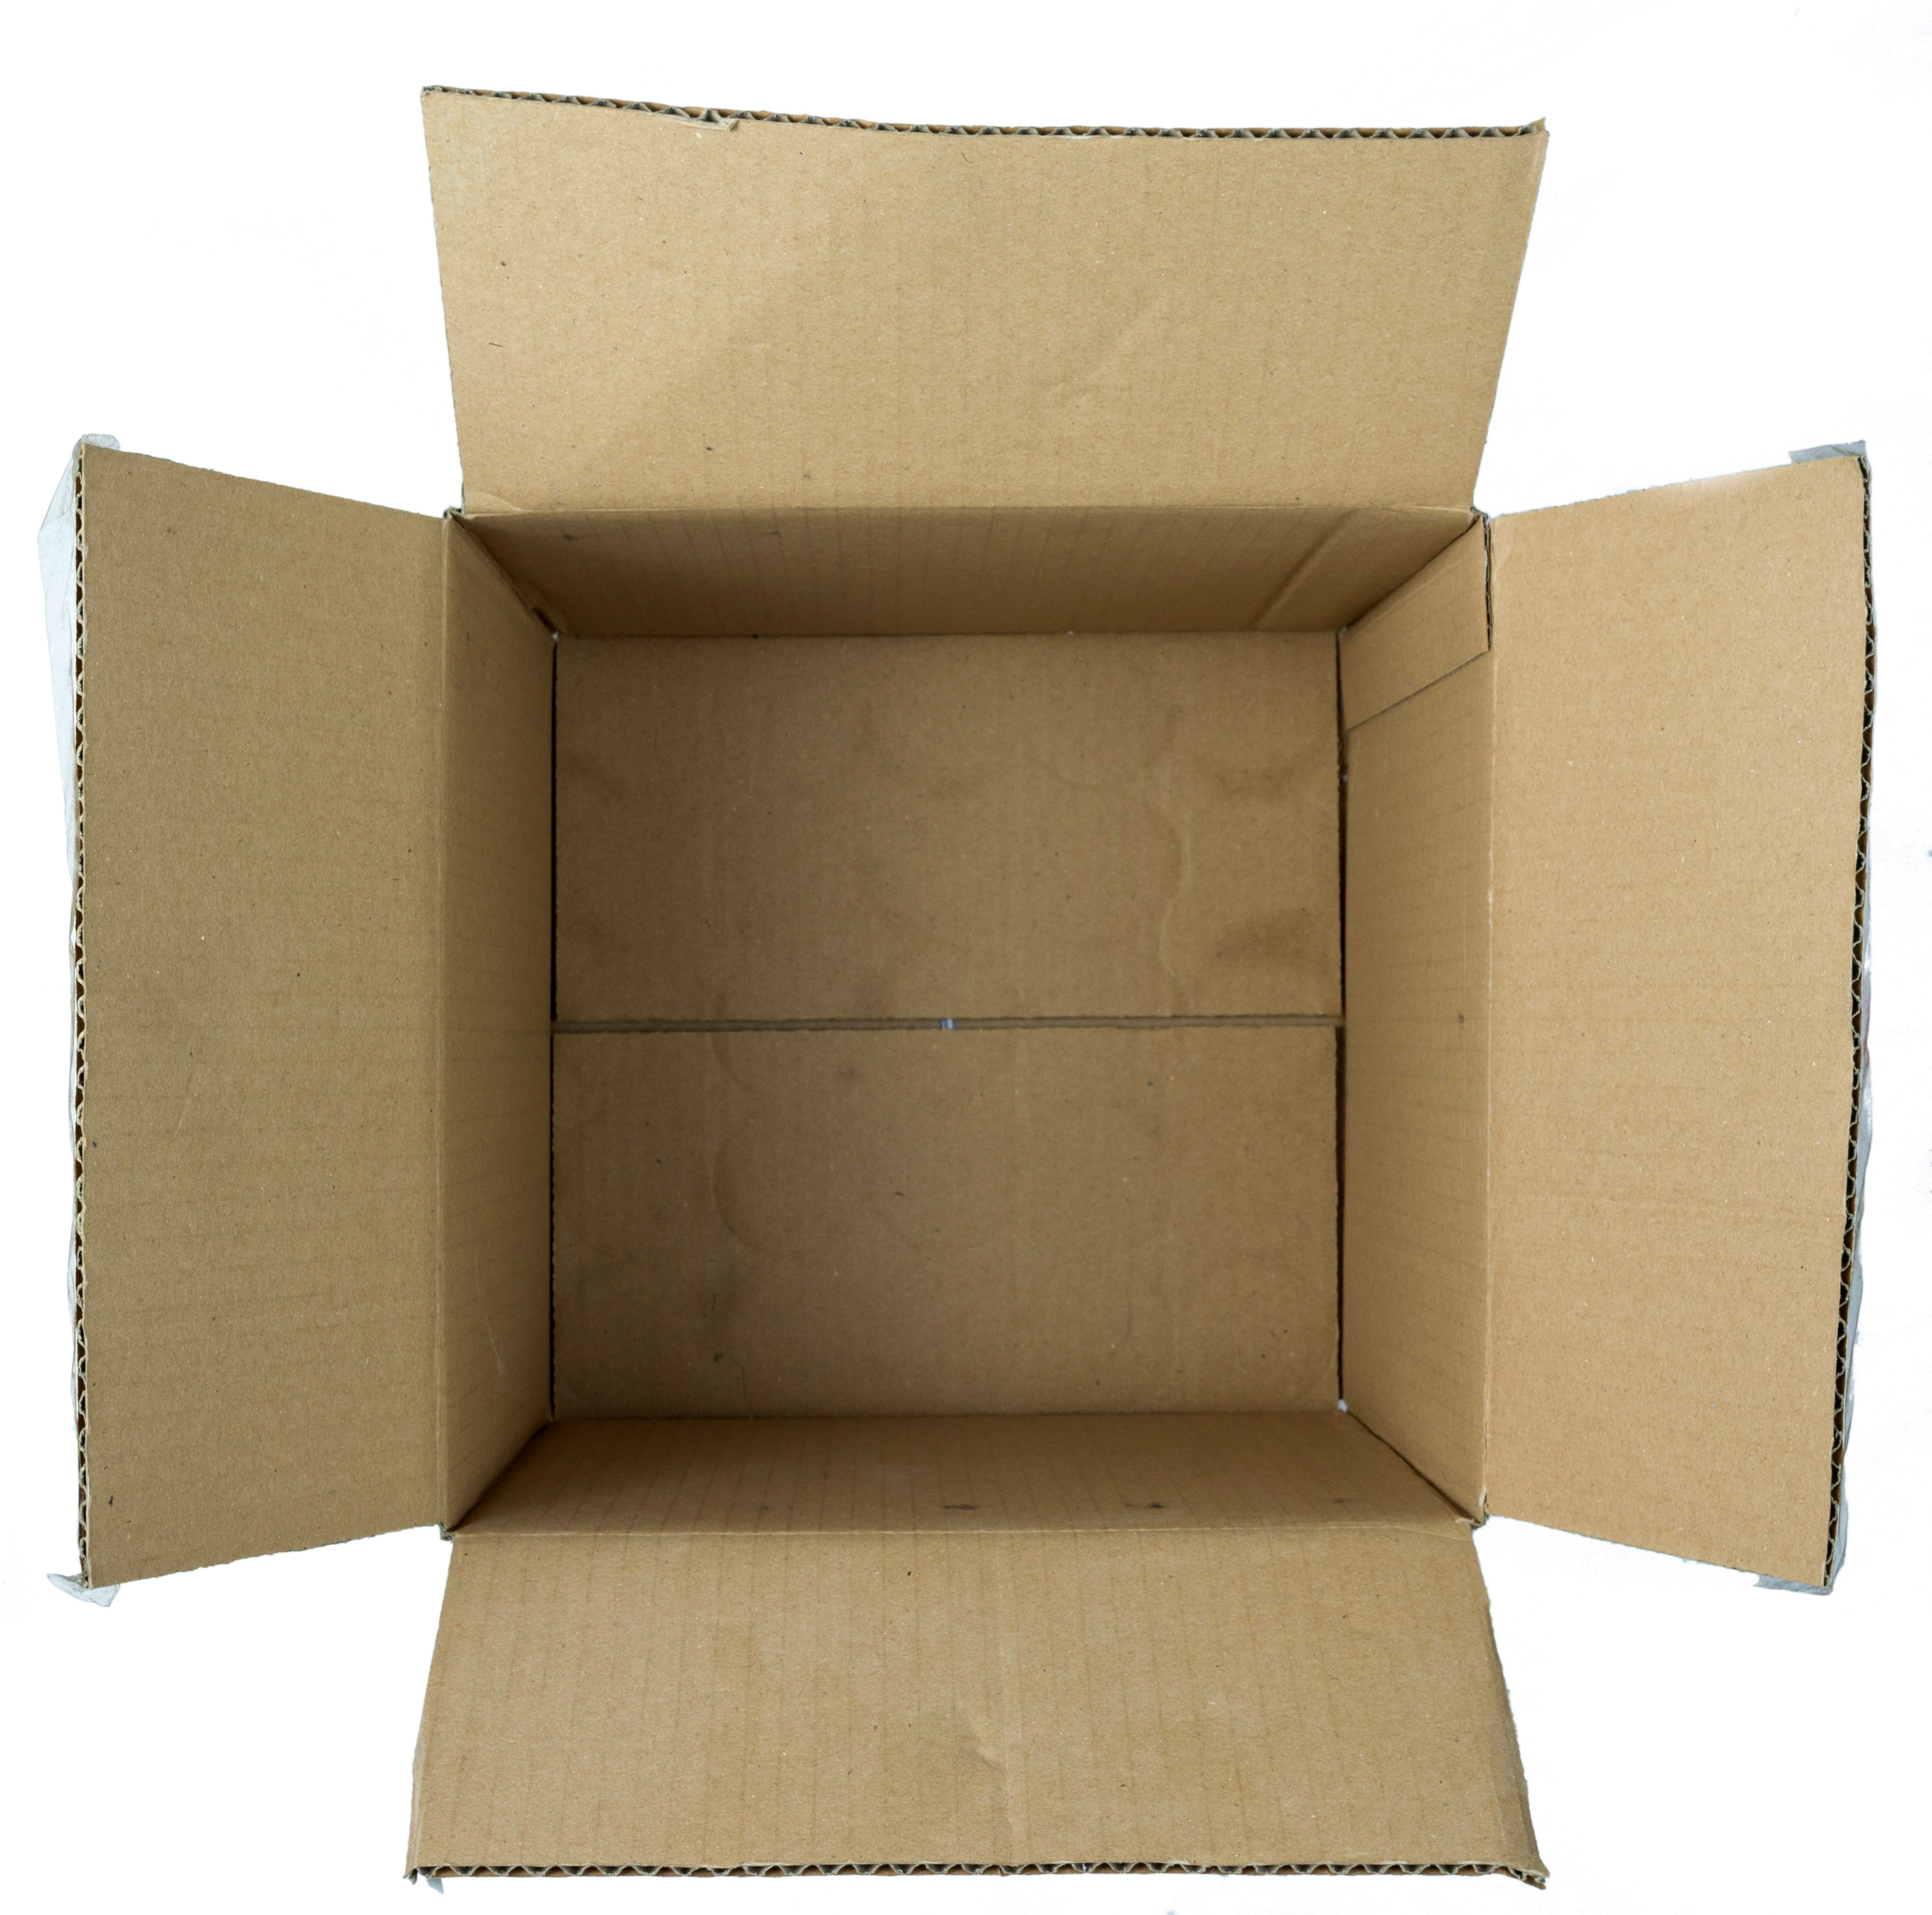 Top package. Картонная коробка. Открытая картонная коробка. Картонная коробка сверху. Пустые картонные коробки.